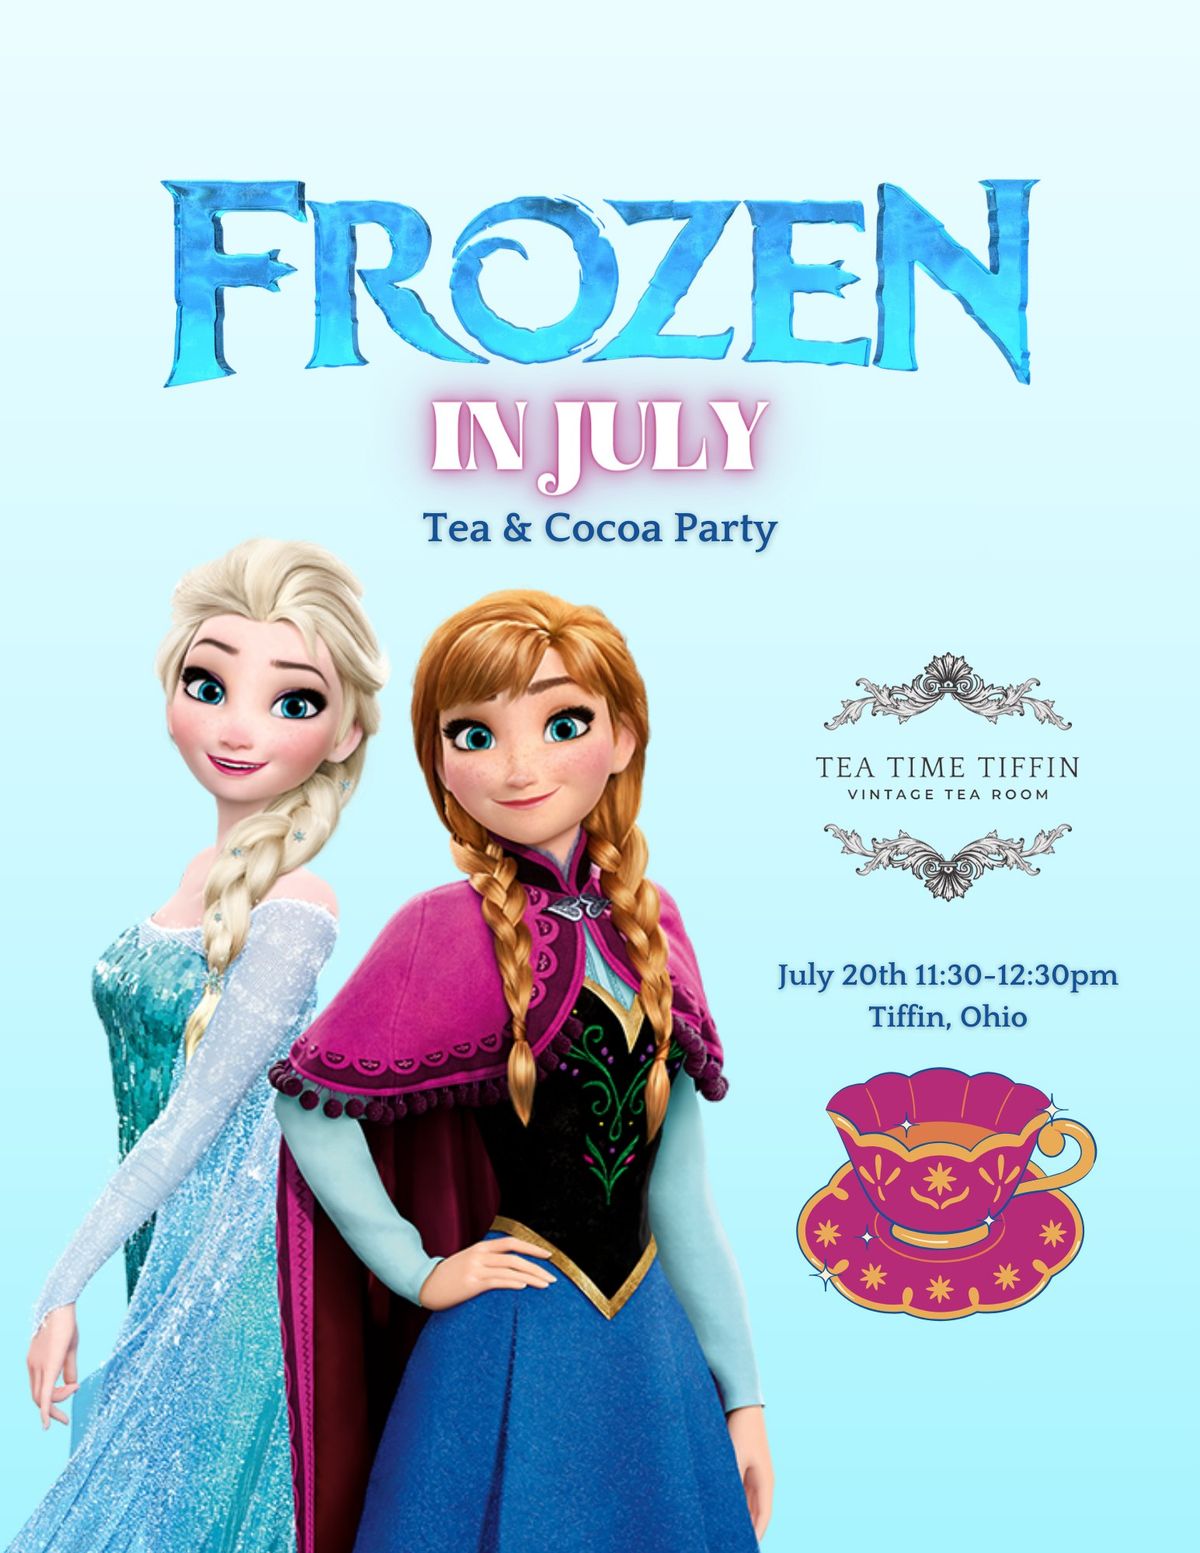 Frozen in July Tea & Cocoa Party